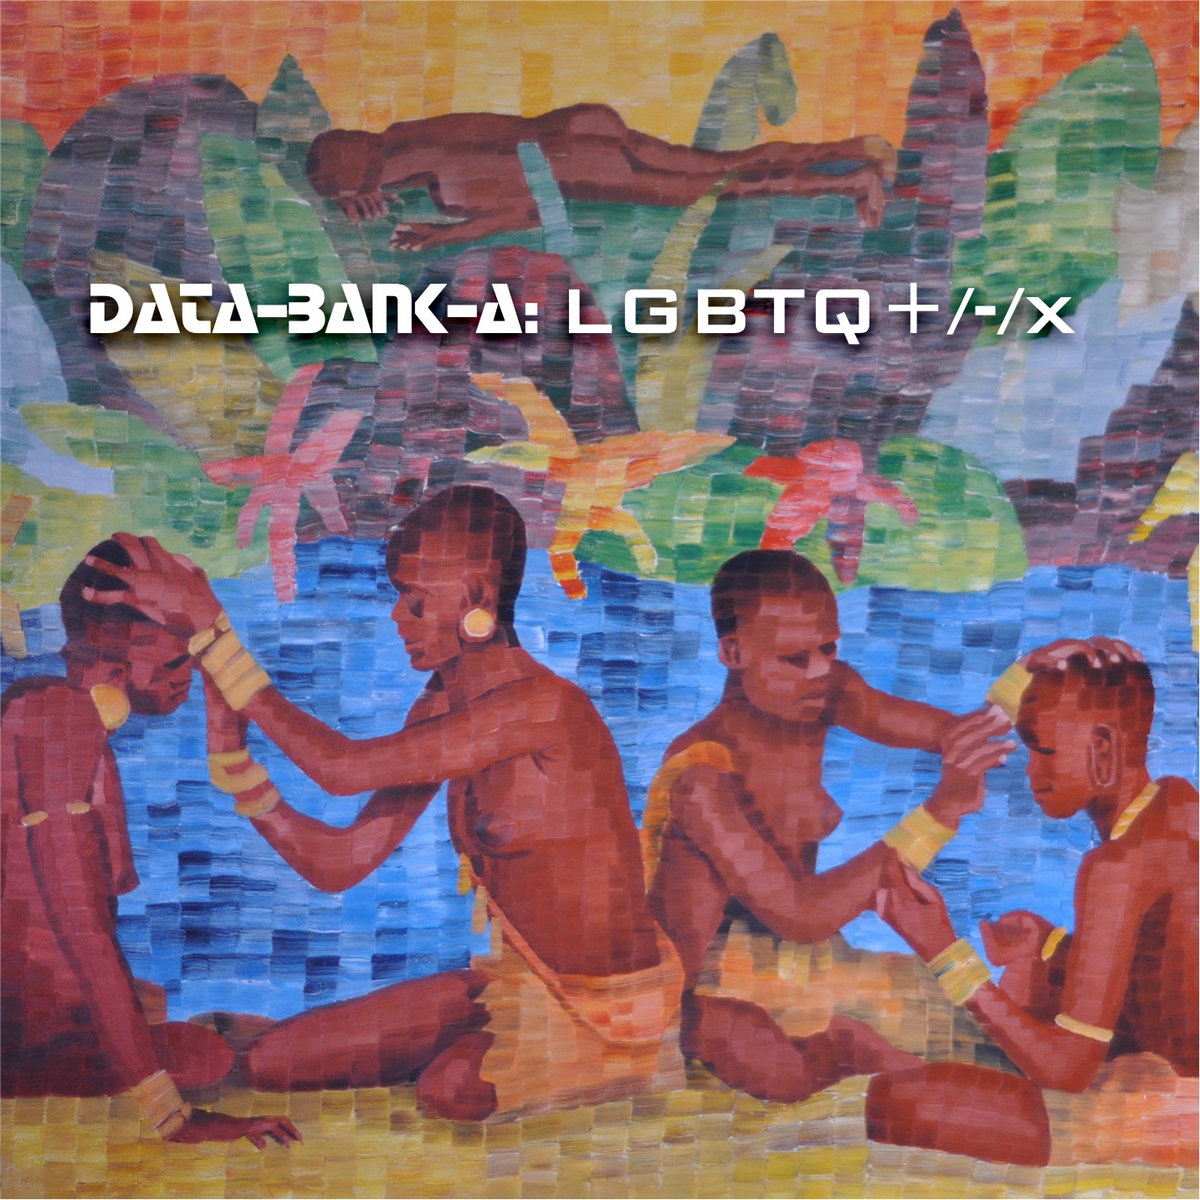 Data-Bank-A, un nouvel album